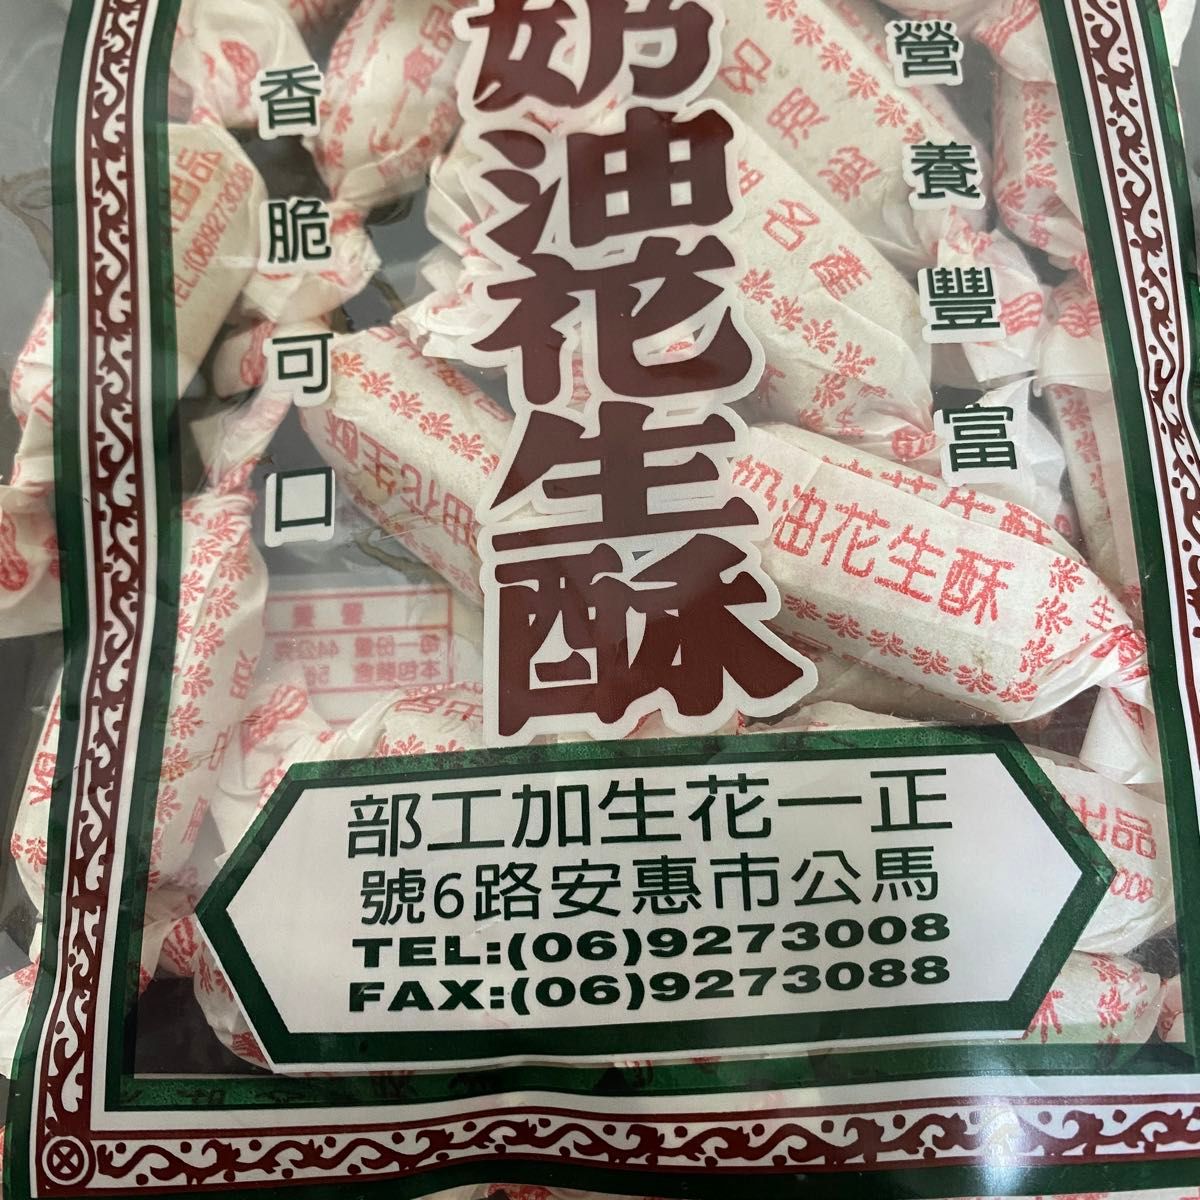 台湾お菓子 澎湖 正一 バターピーナッツ 油花生酥 220g